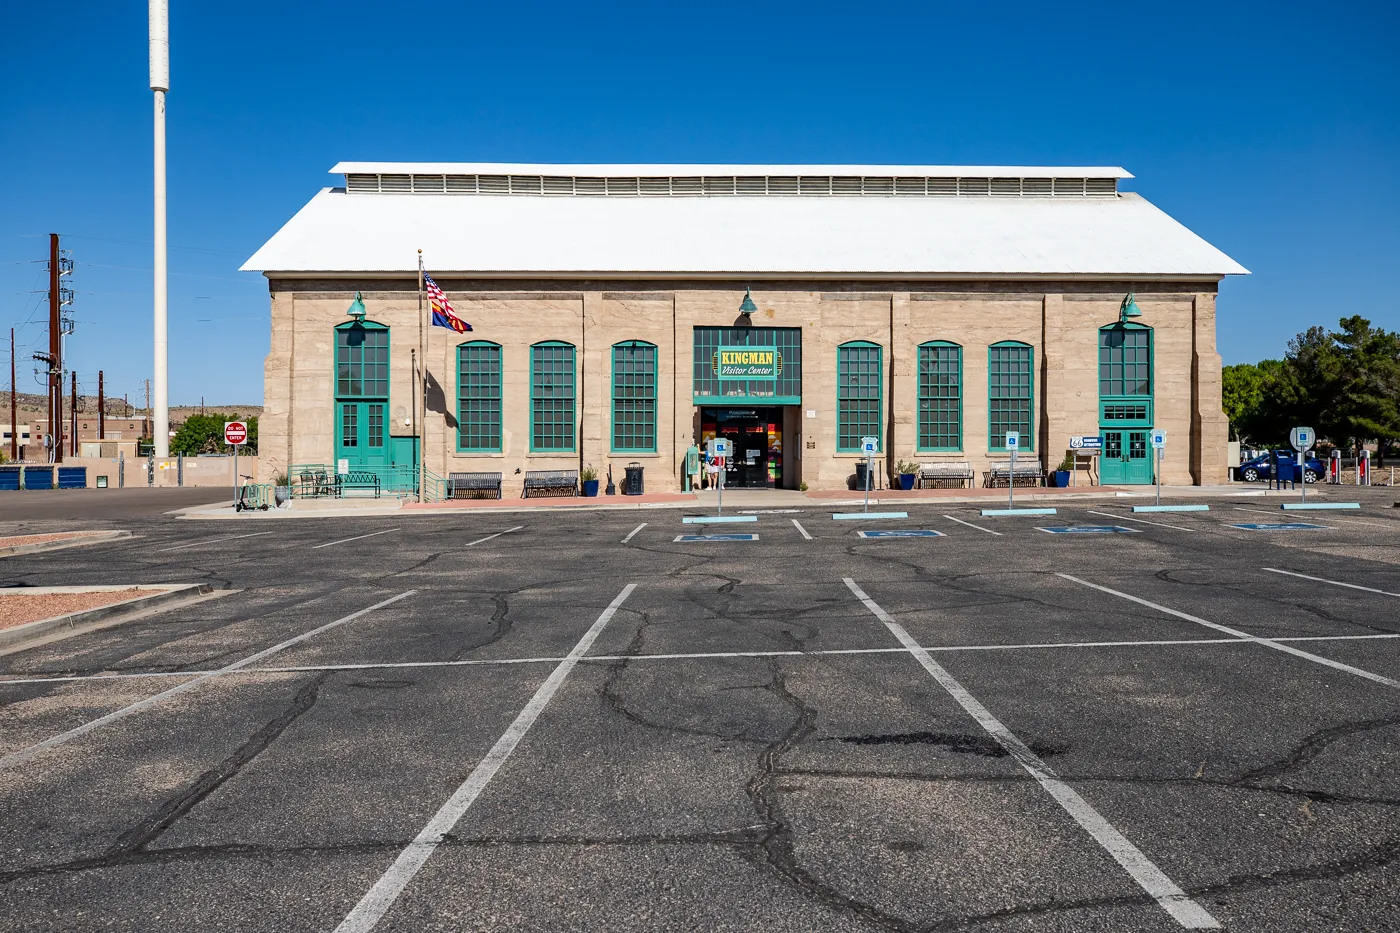 Powerhouse Visitor Center & Route 66 Museum in Kingman, Arizona